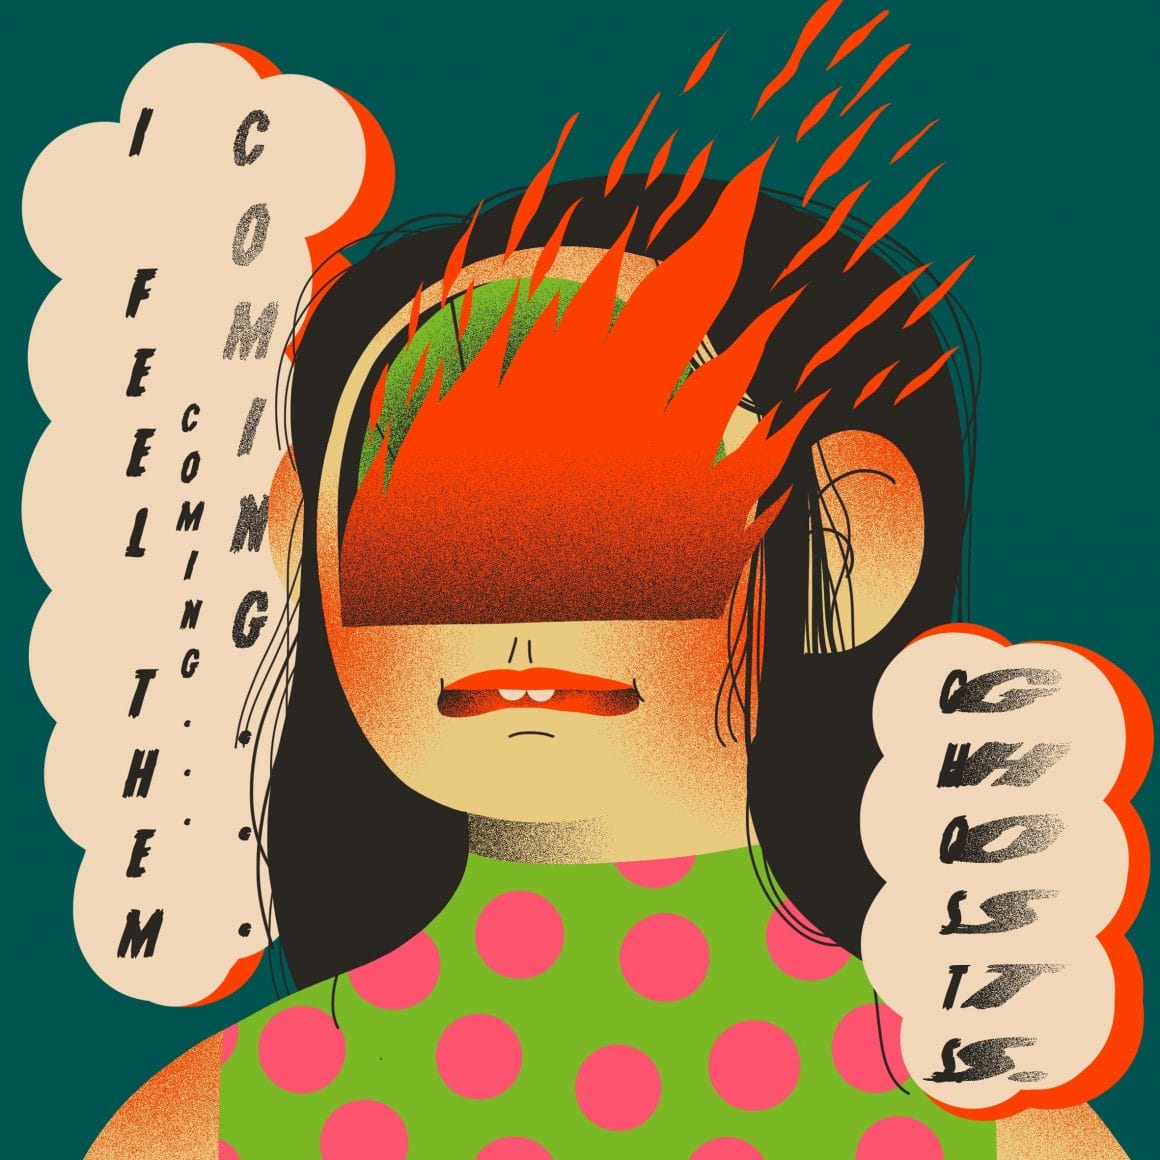 Portraits of feelings par Genie Espinosa. Un personnage féminin au visage en feu. Des bulles contiennent les mots "I fell them coming" "Ghosts" 